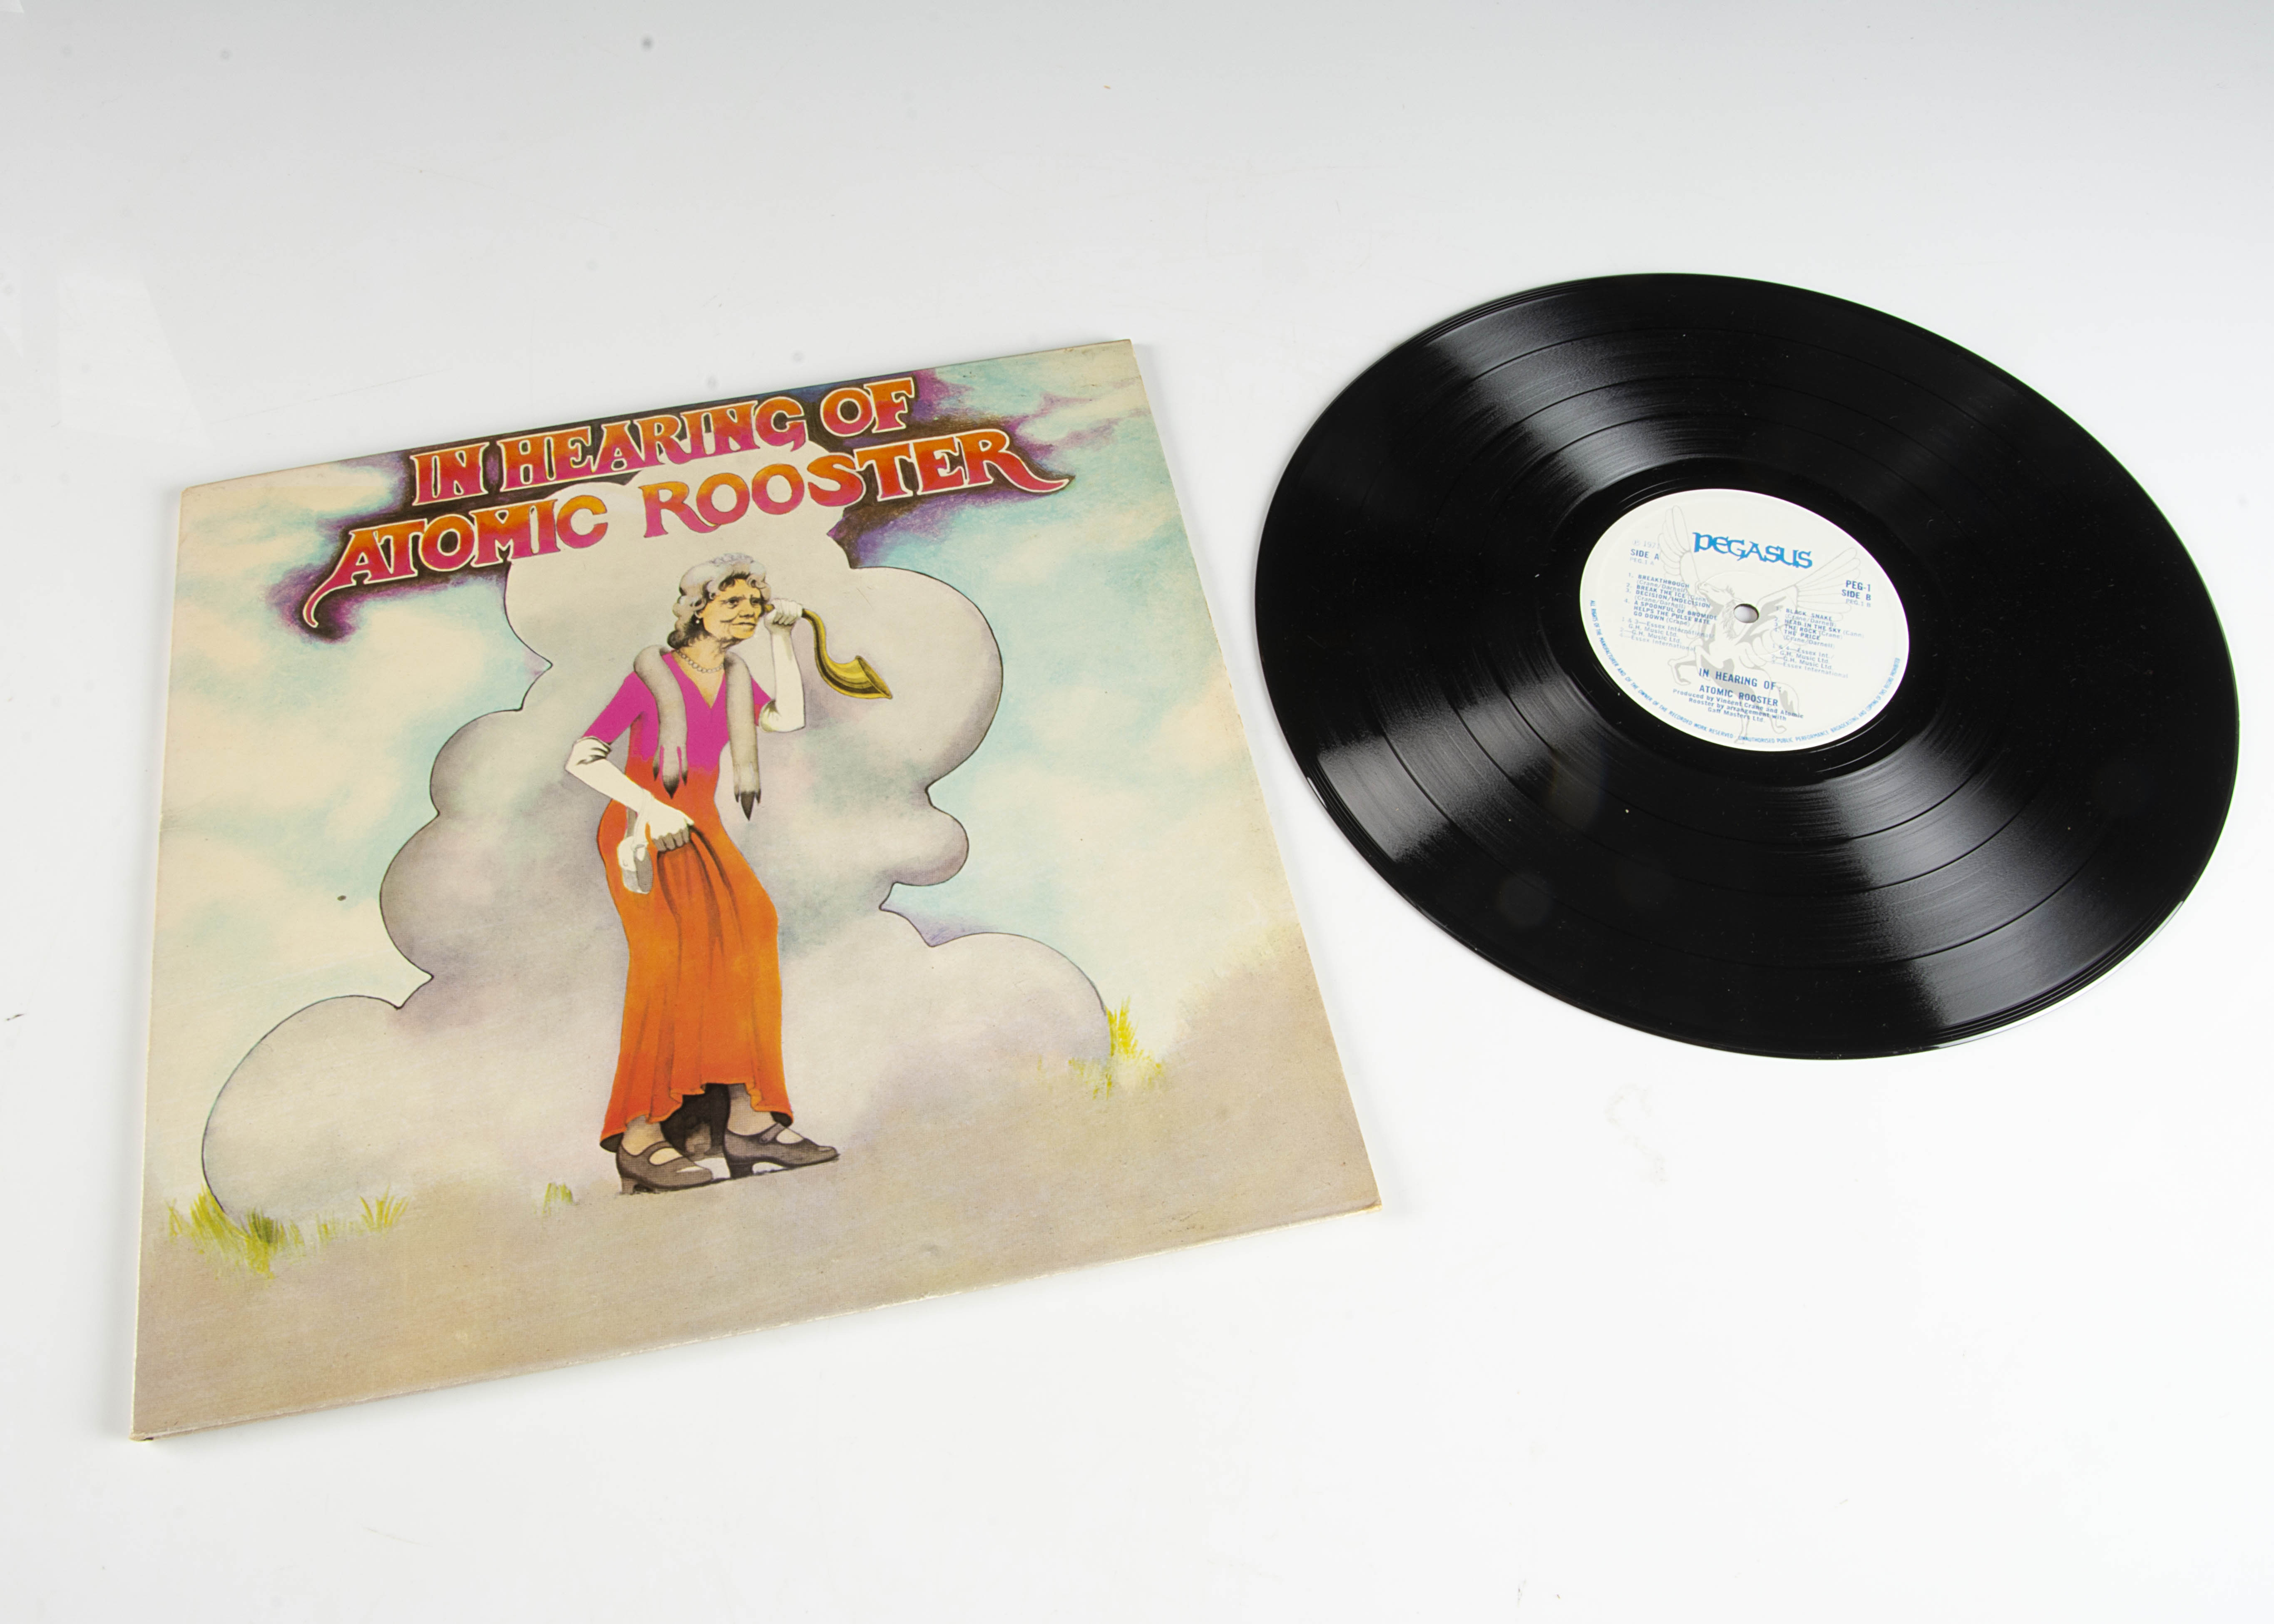 Atomic Rooster LP, In Hearing of Atomic Rooster LP - Original UK release 1971 on Pegasus (PEG1) -